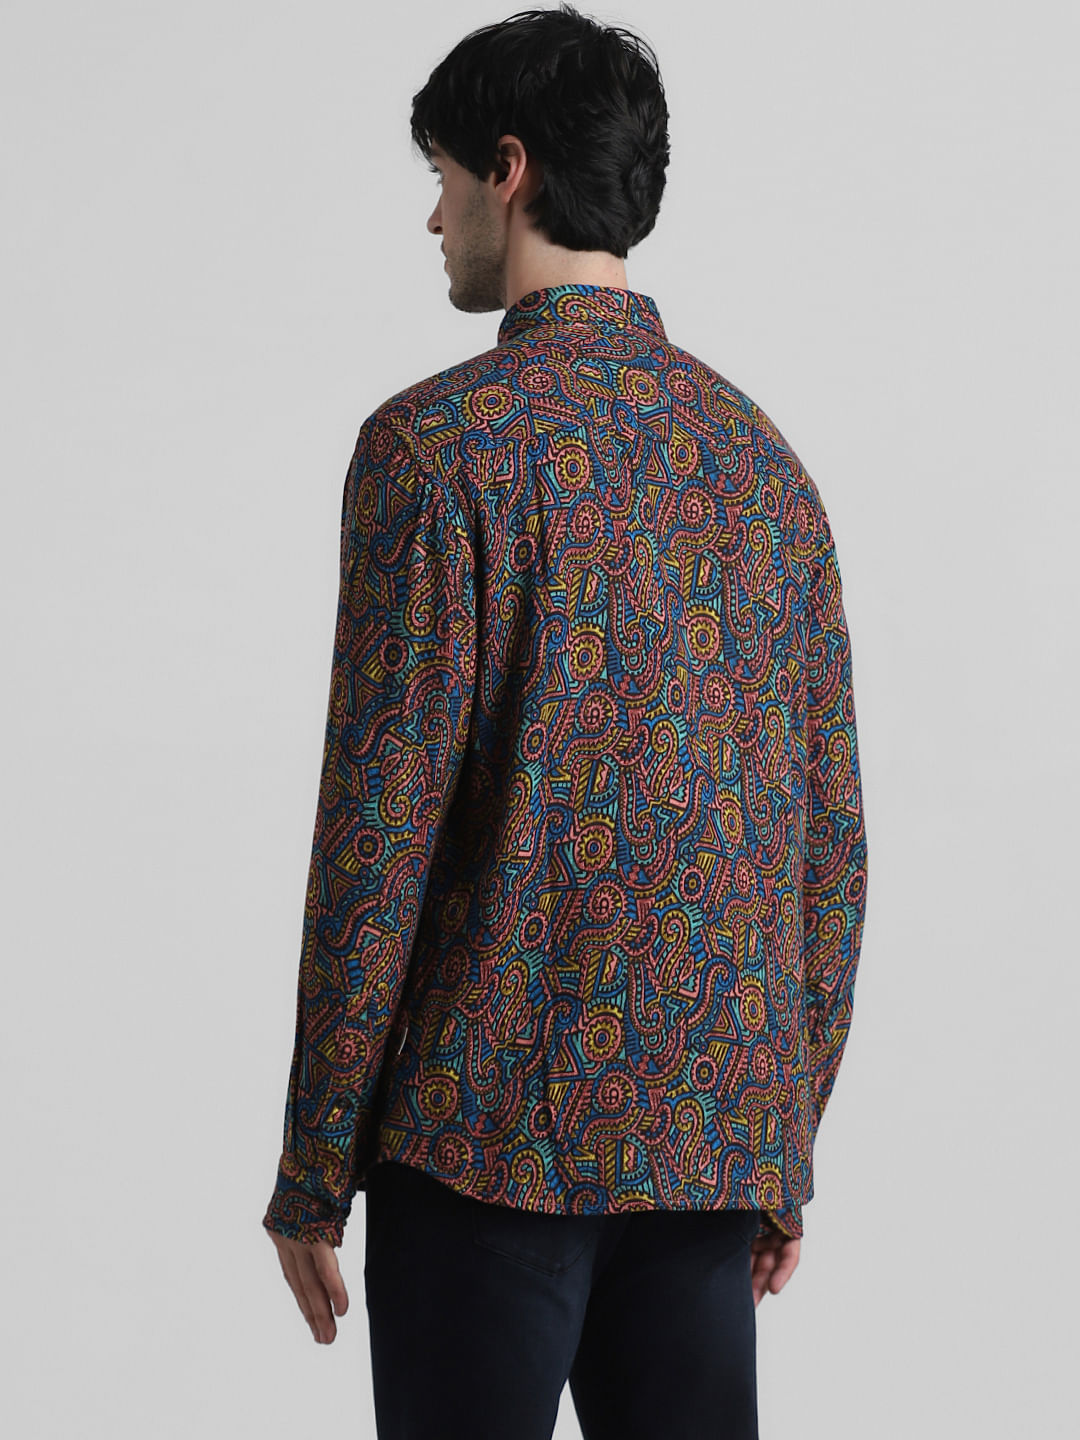 Multi-Coloured Printed Full Sleeves Shirt